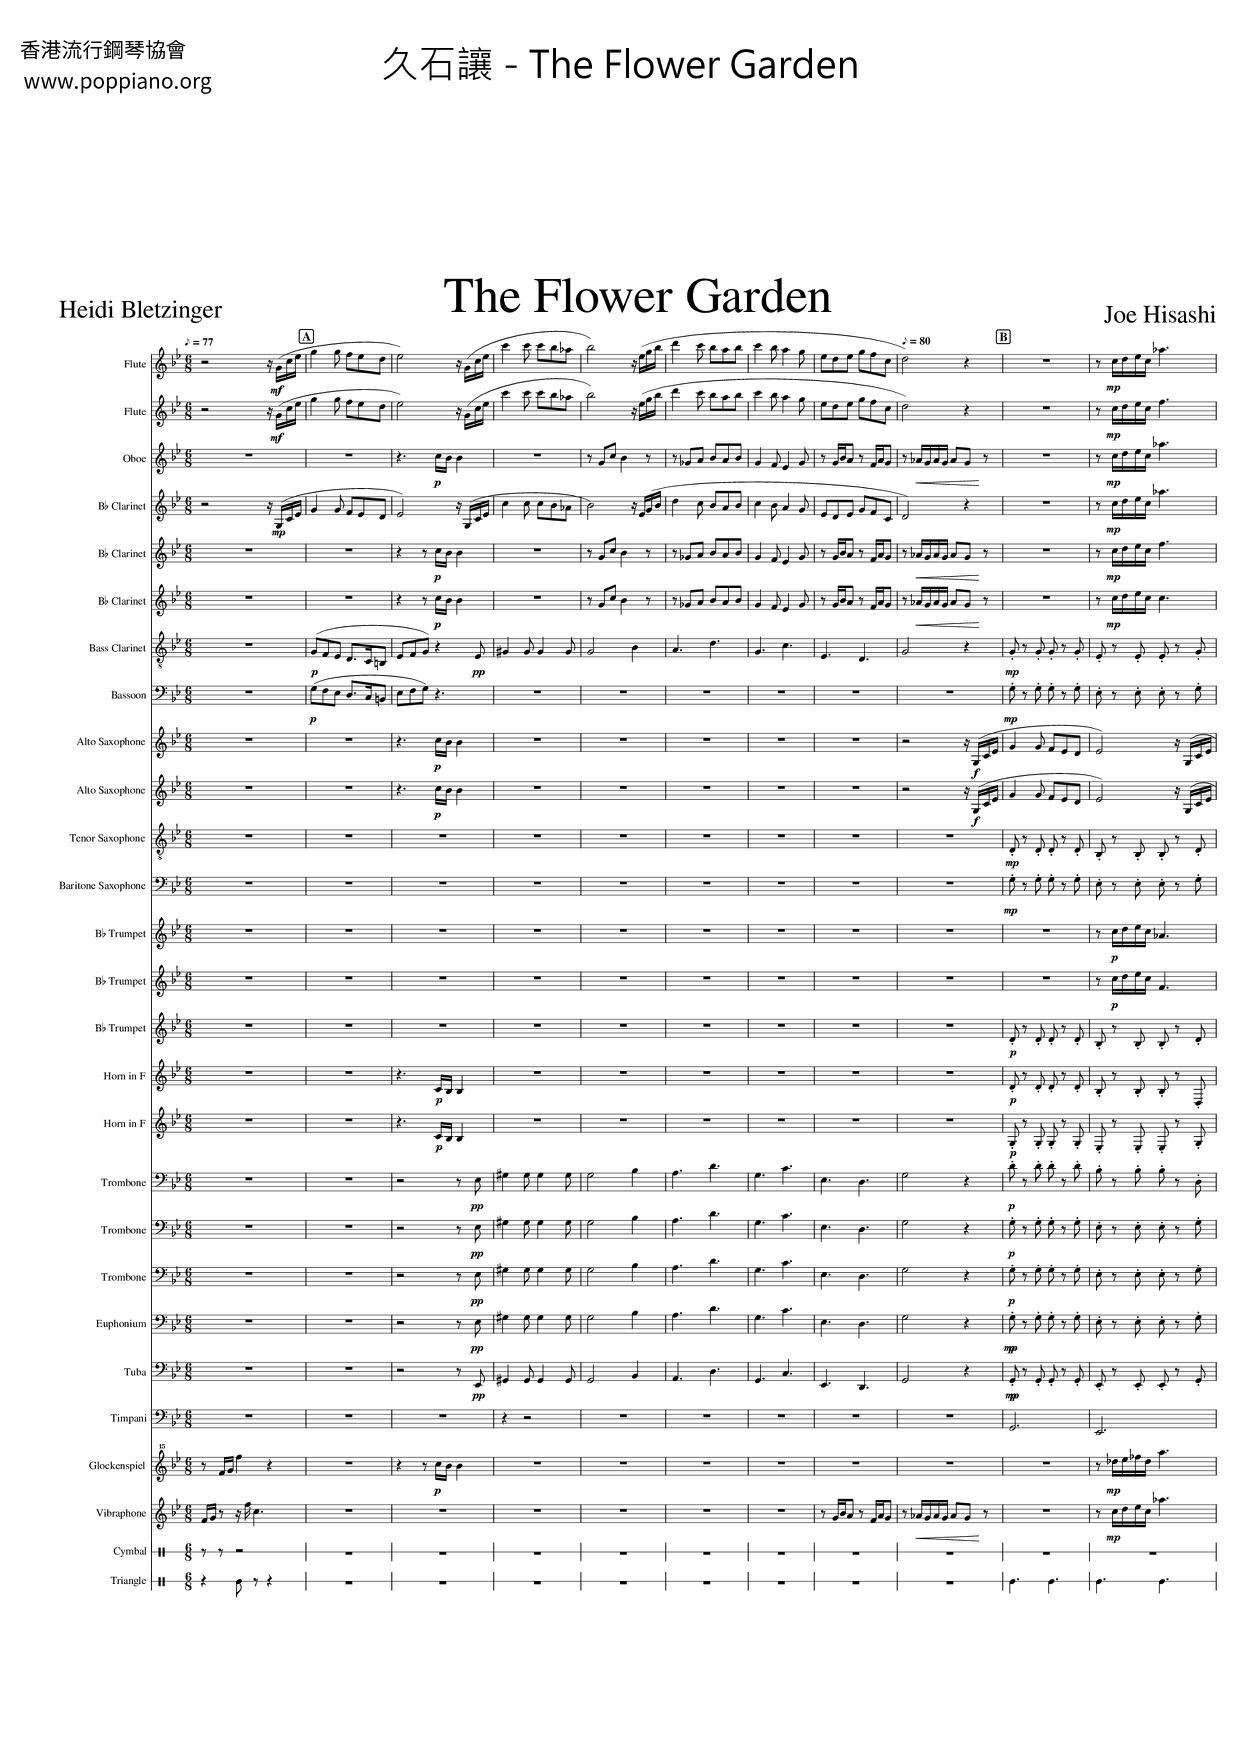 The Flower Garden Score